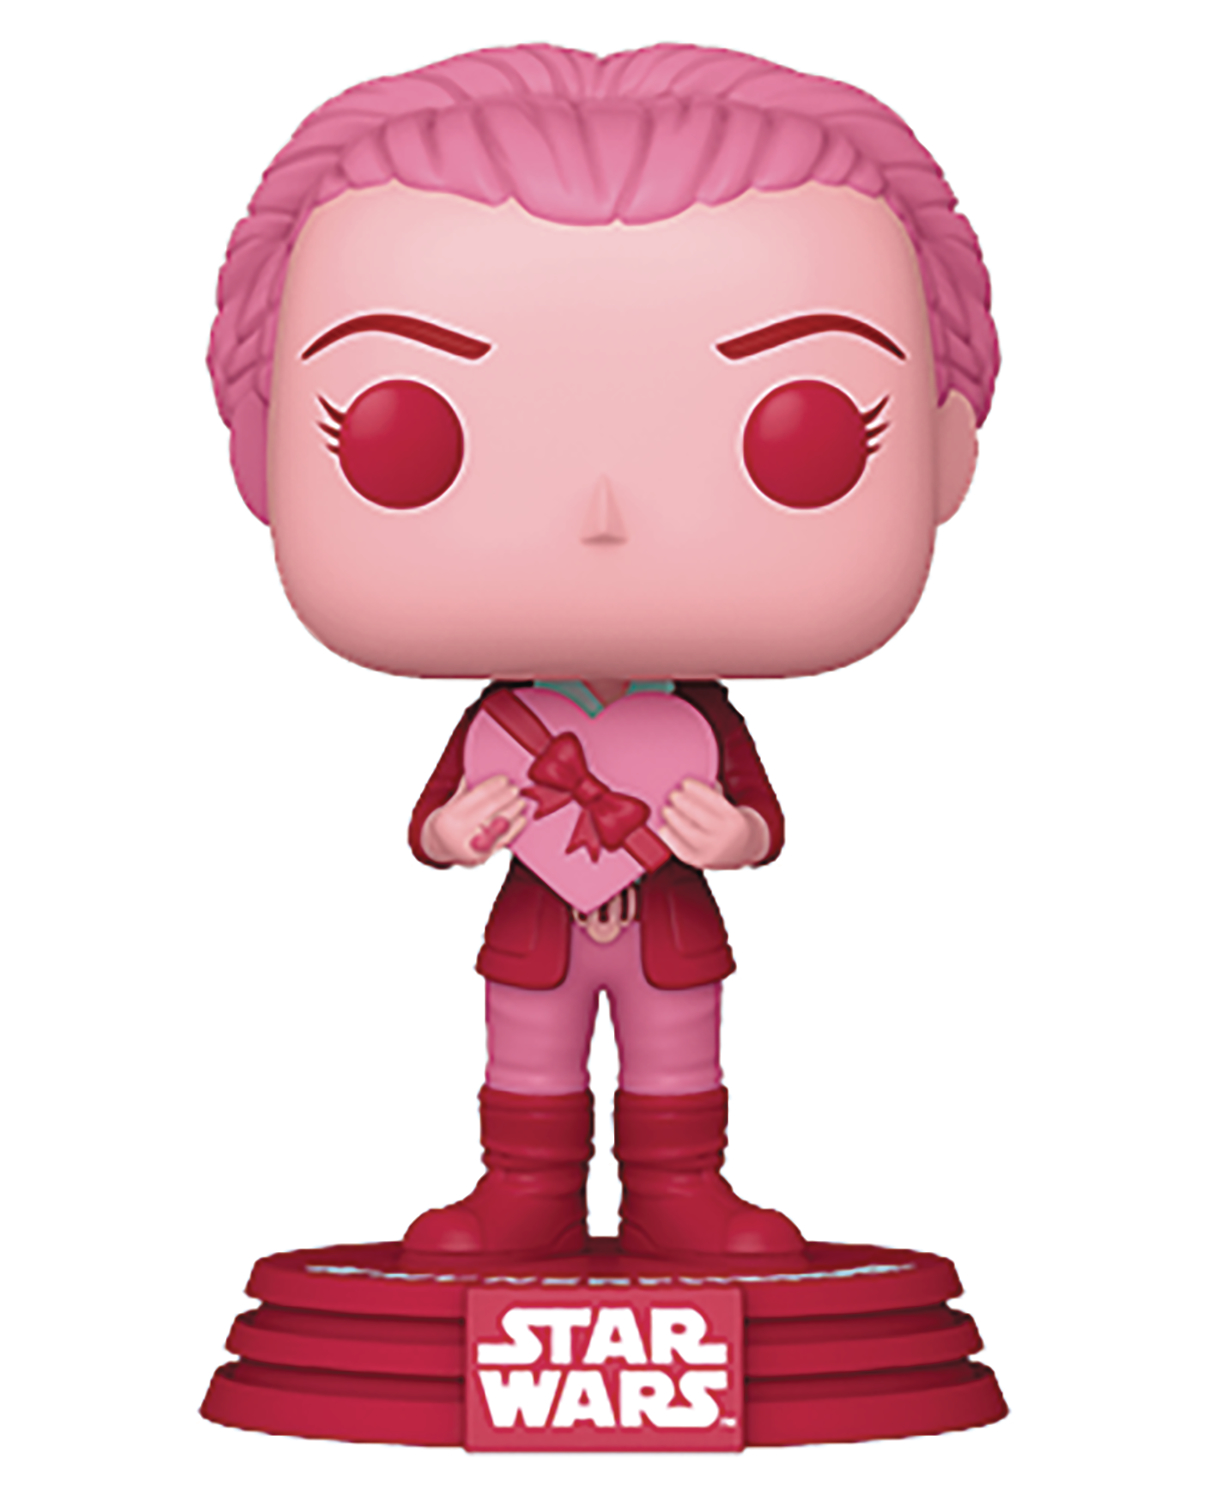 Pop Star Wars Valentines S3 Leia Vinyl Figure 